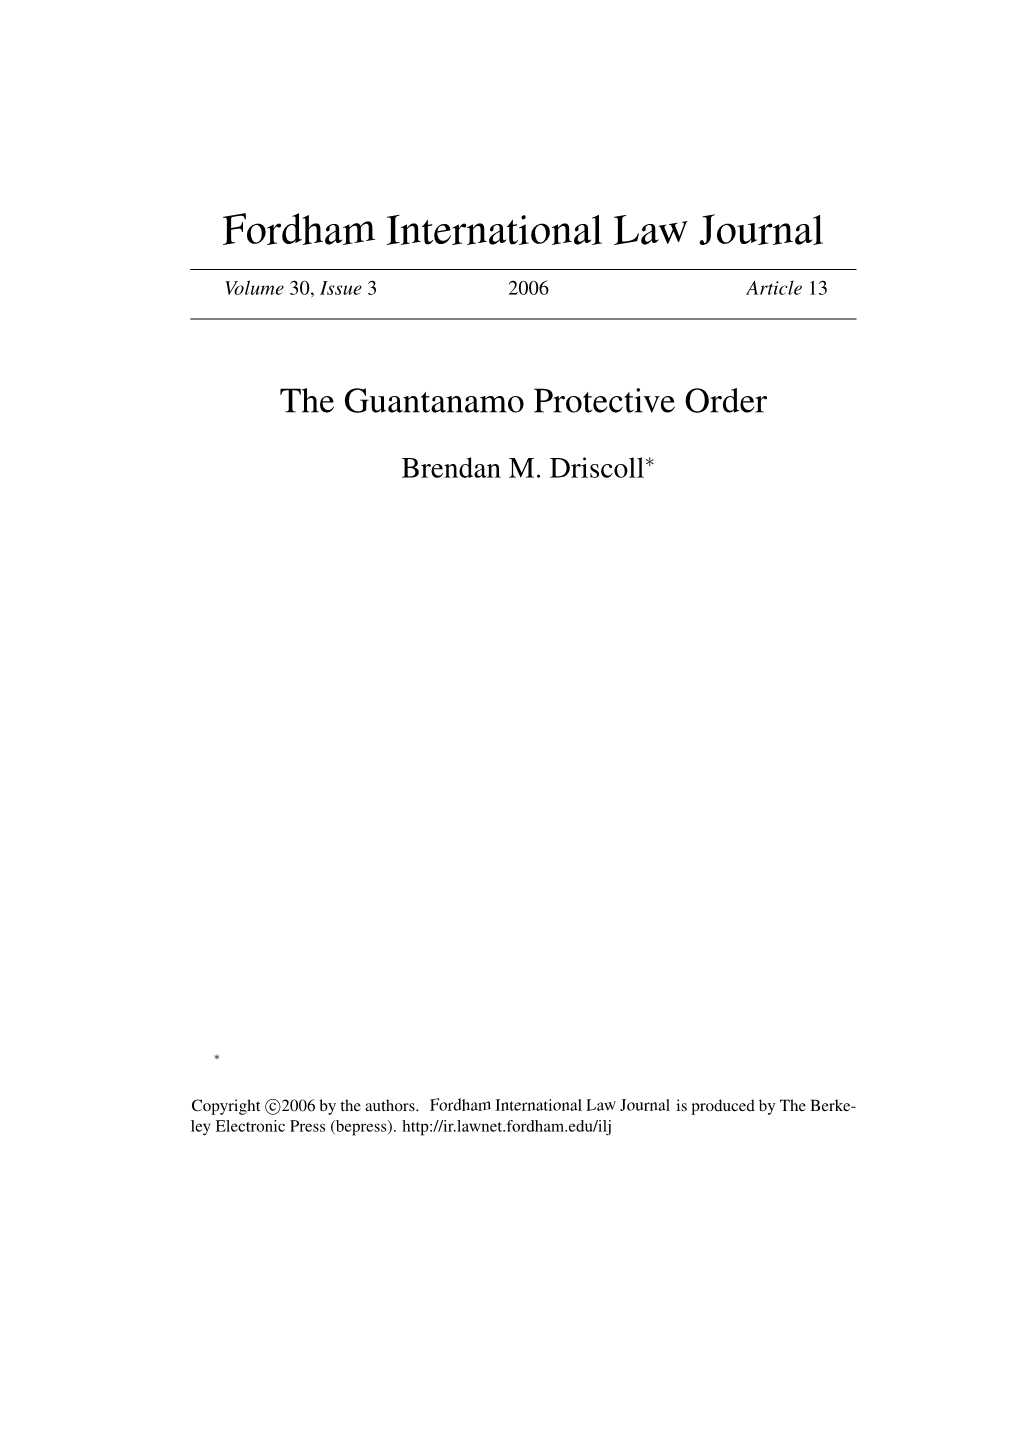 The Guantanamo Protective Order